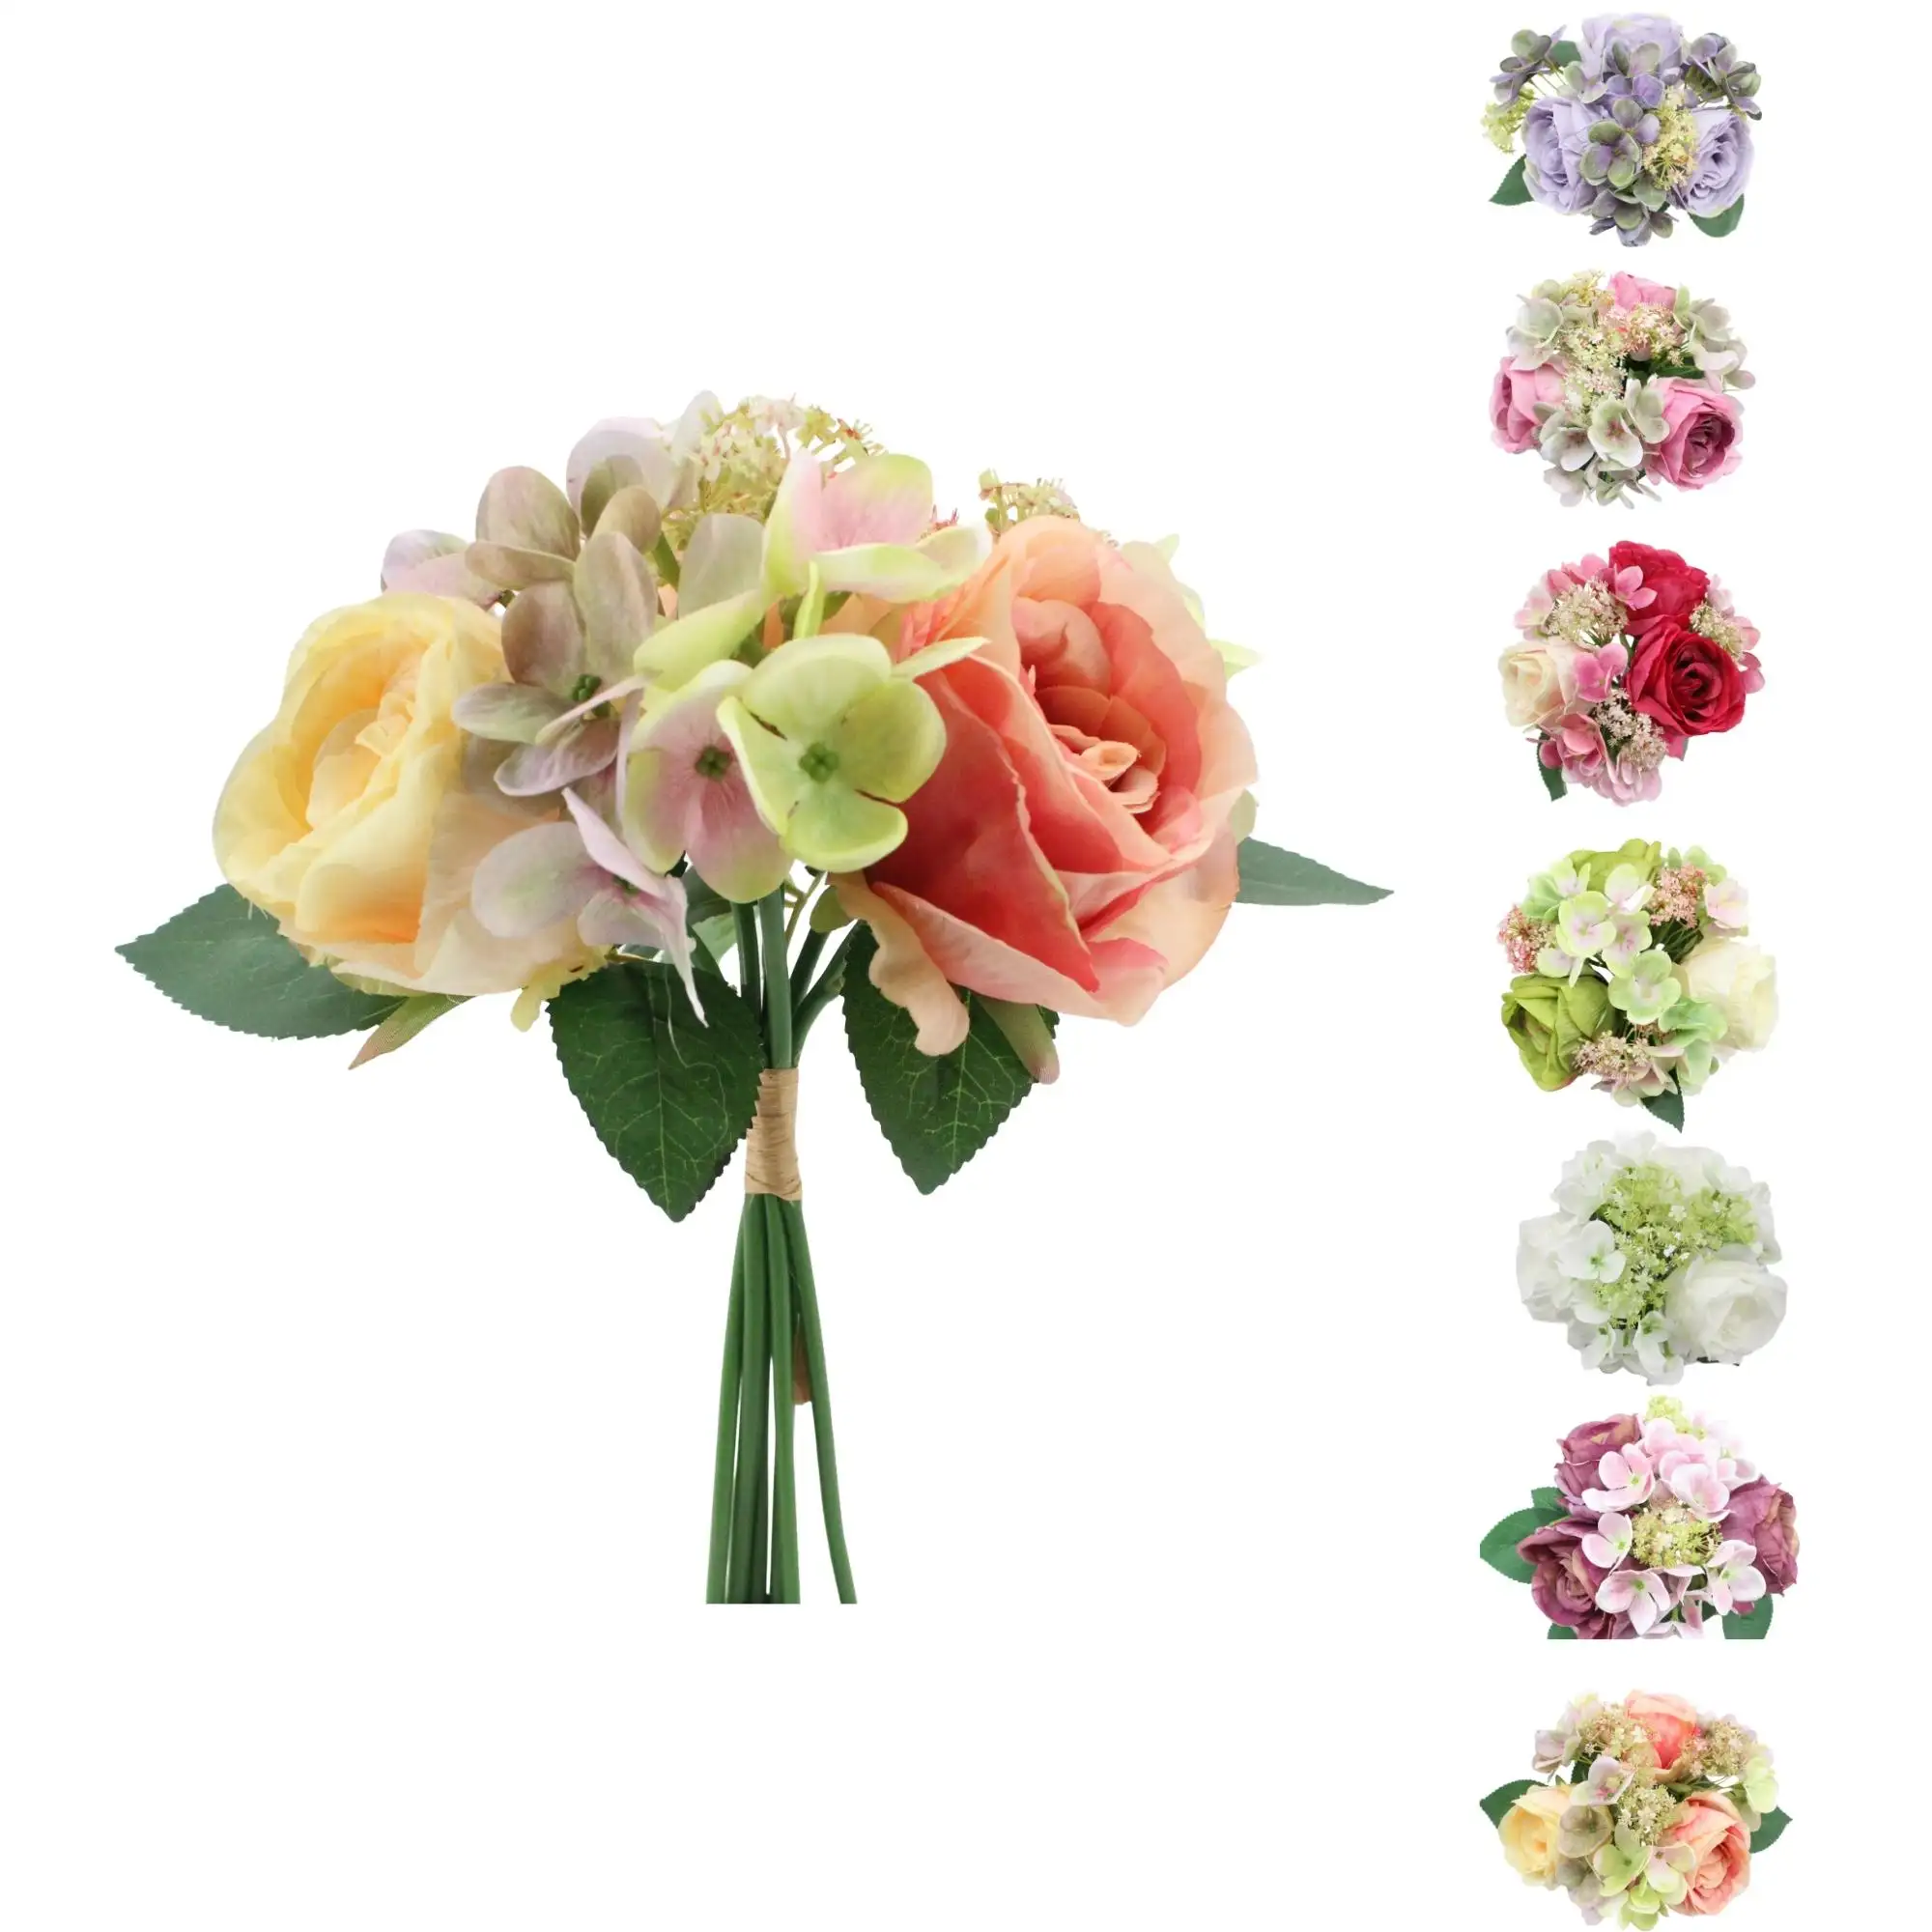 Manufacturers Of Direct Wedding Supplies Rose Hydrangea Floral Bundles Artificial Wedding Flower Bridal Bouquet For Decoration